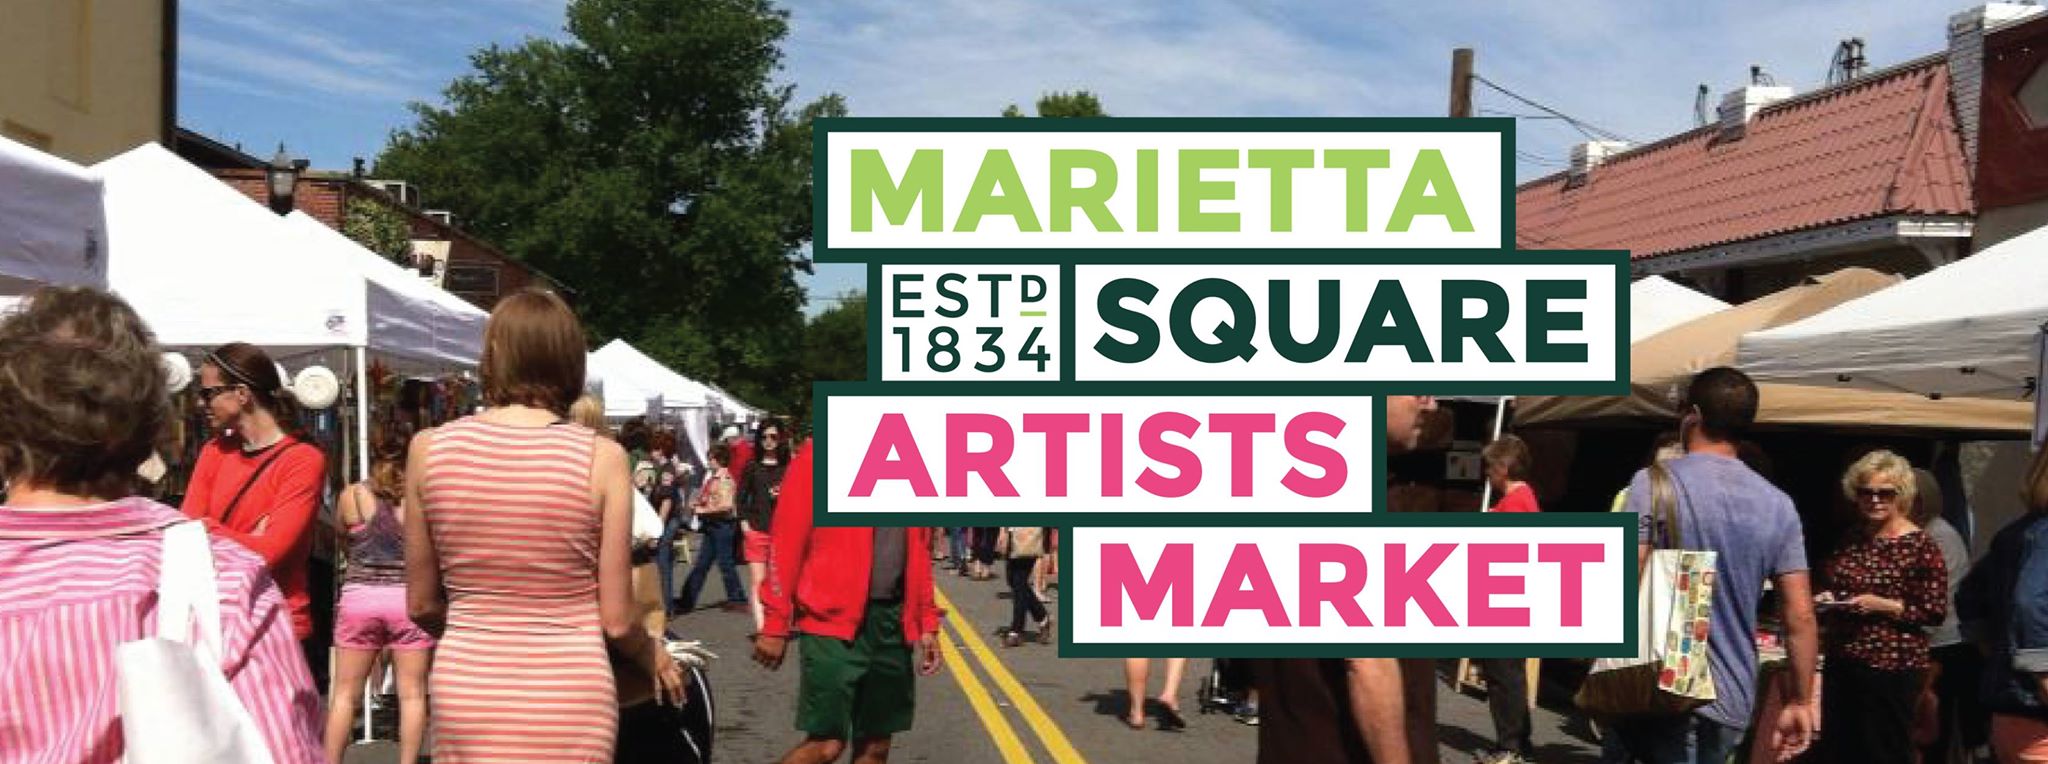 Marietta Square Artisan Market 1